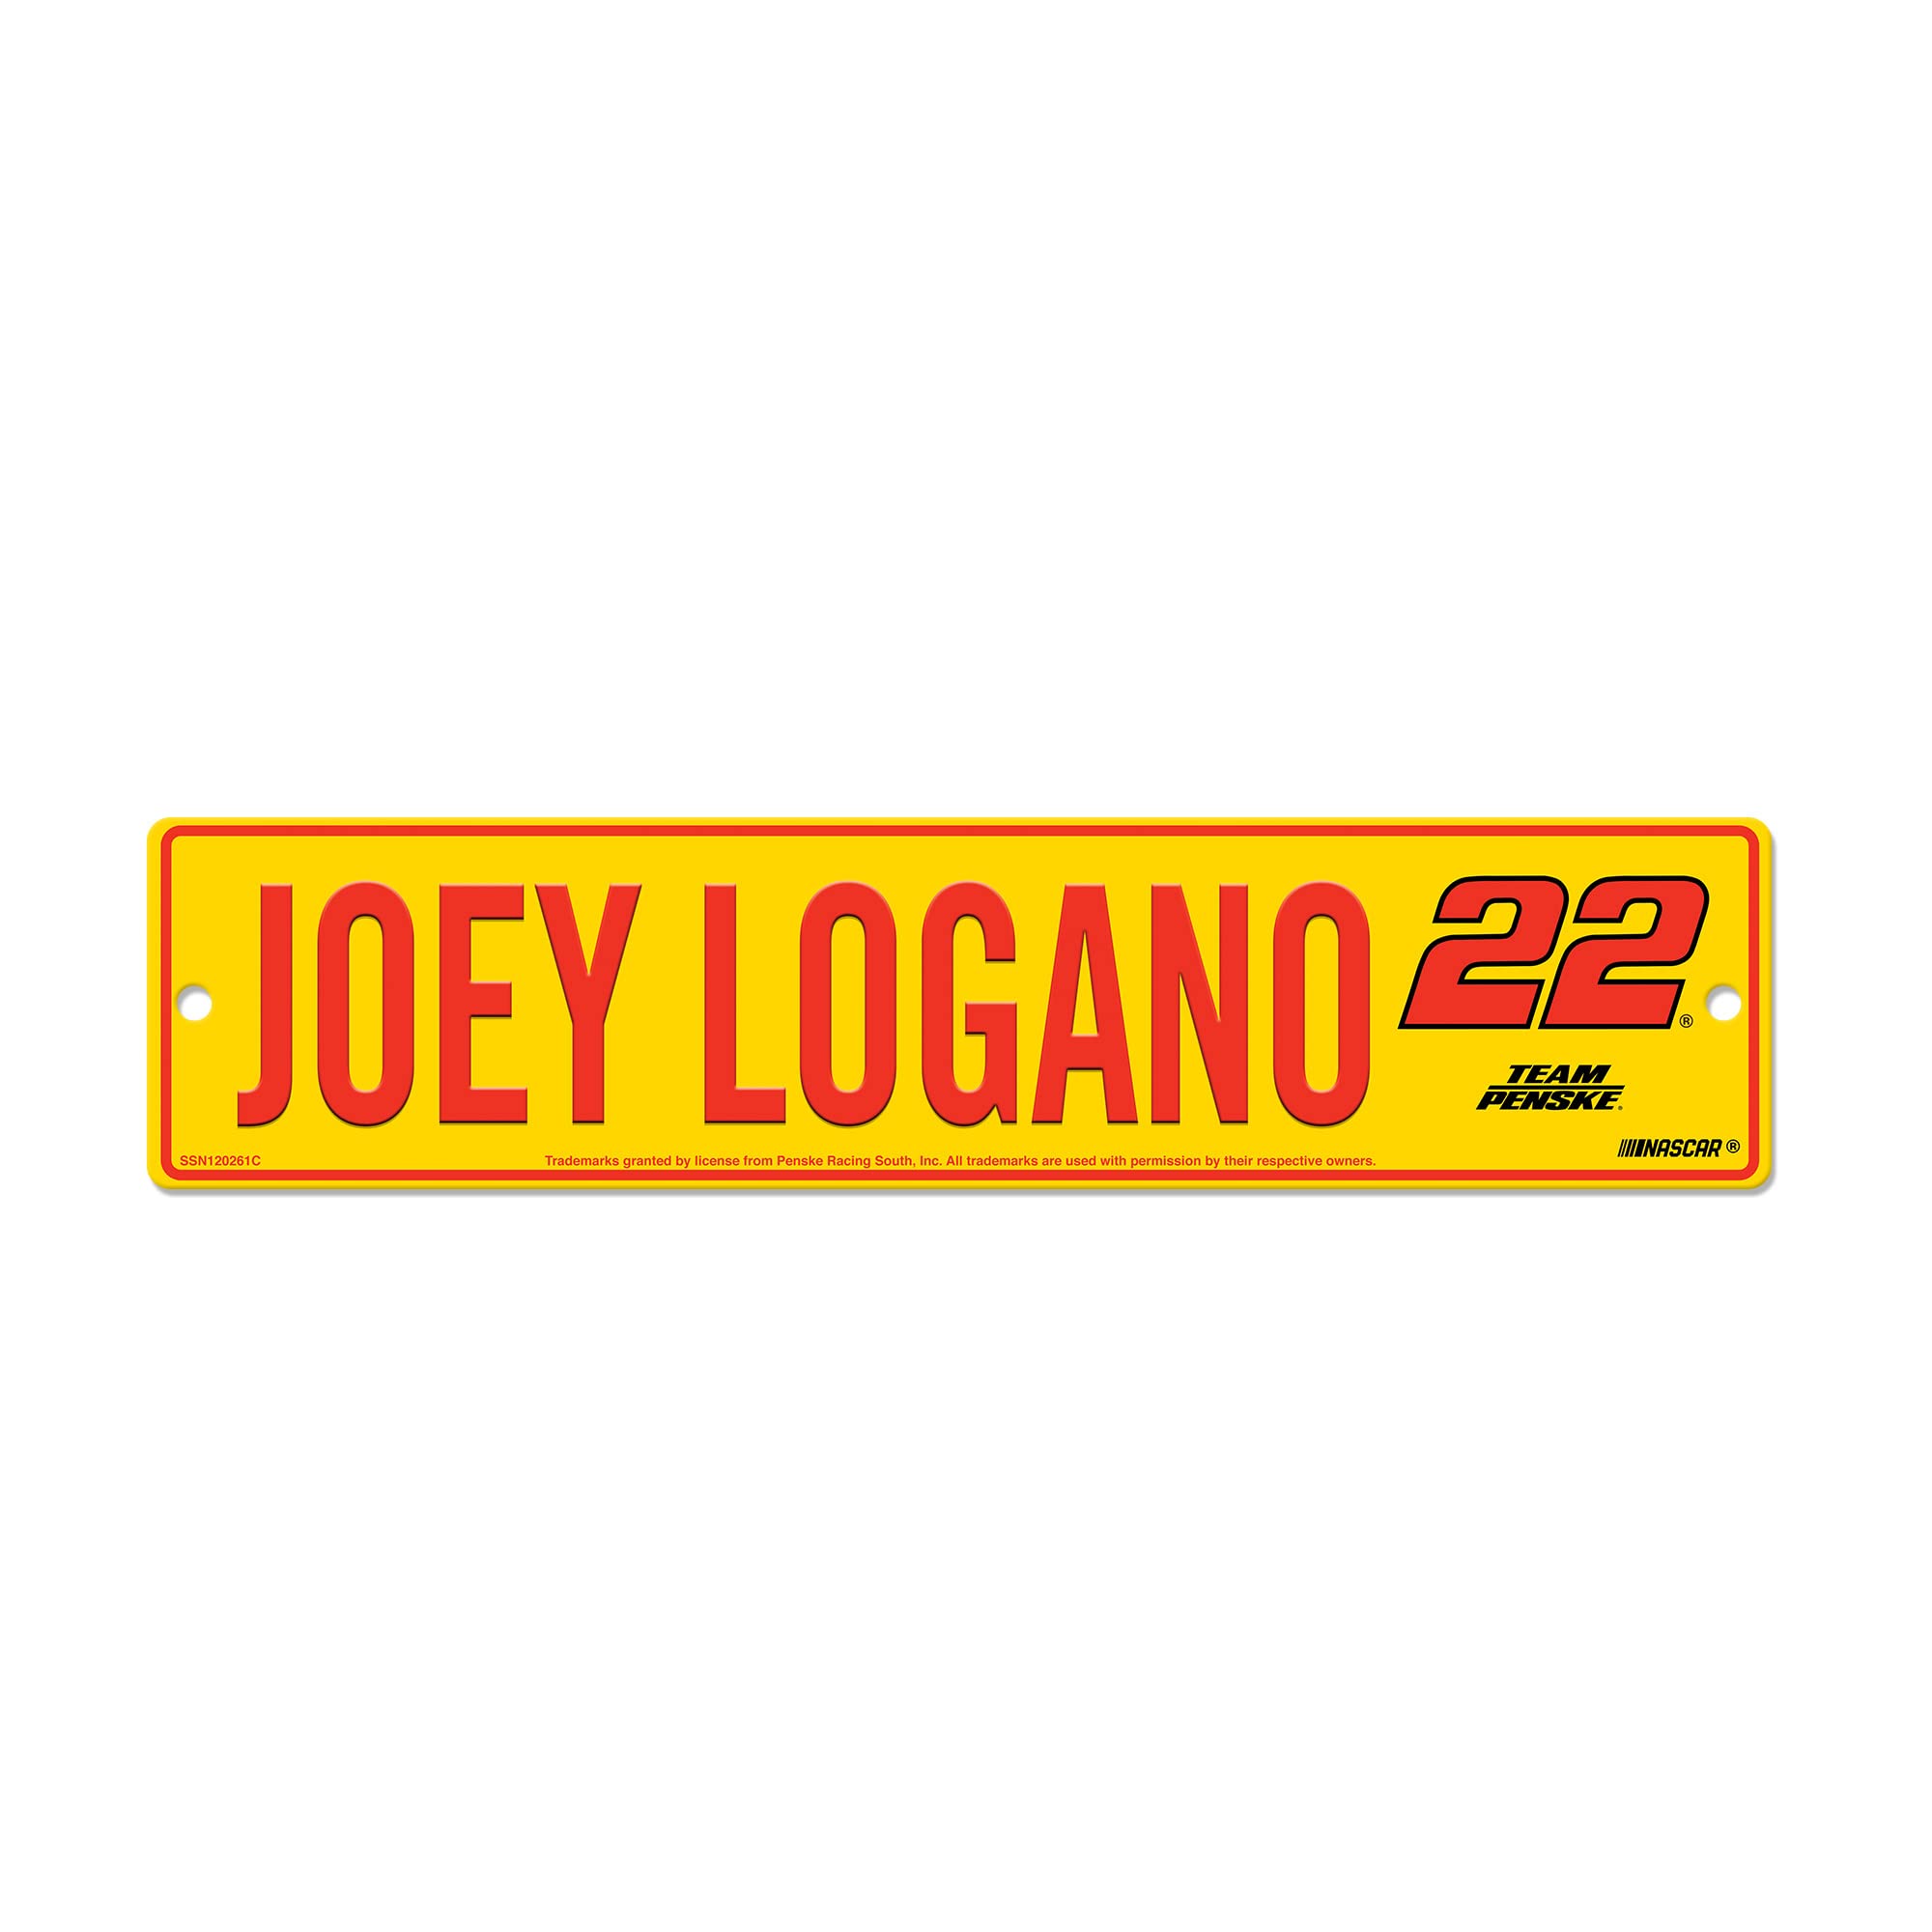 Rico Industries NASCAR Racing Joey Logano #22 TEAM PENSKE Yellow 4" X 17" Plastic Street Sign